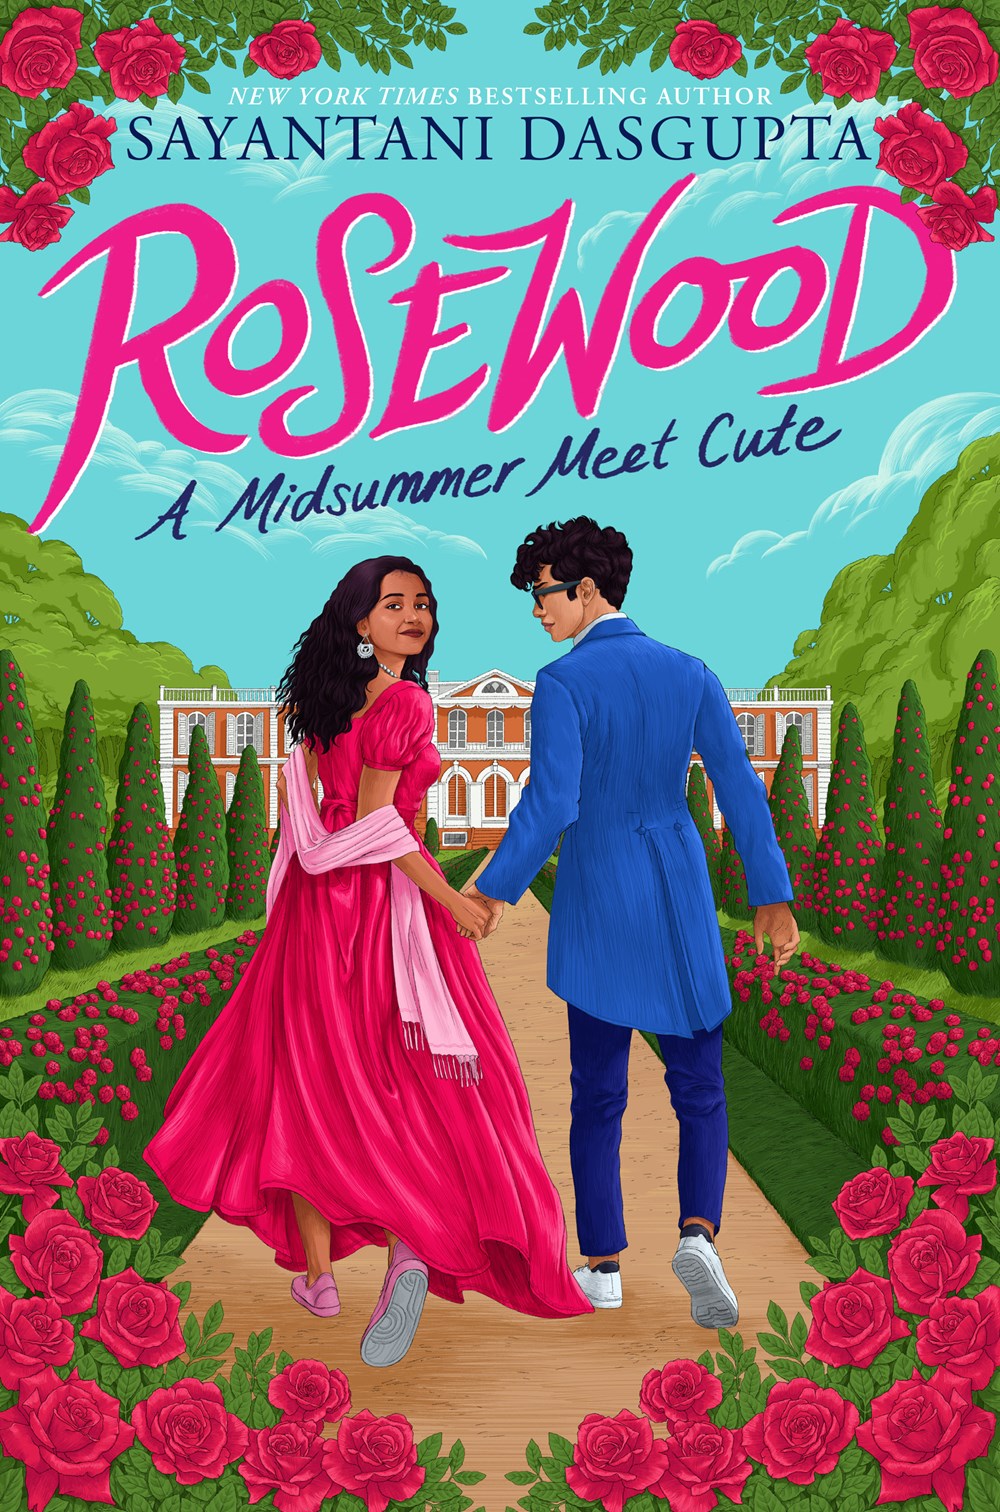 Spotlight on Rosewood: A Midsummer Meet Cute (Sayantani DasGupta), Excerpt Plus Giveaway! ~US/CAN Only